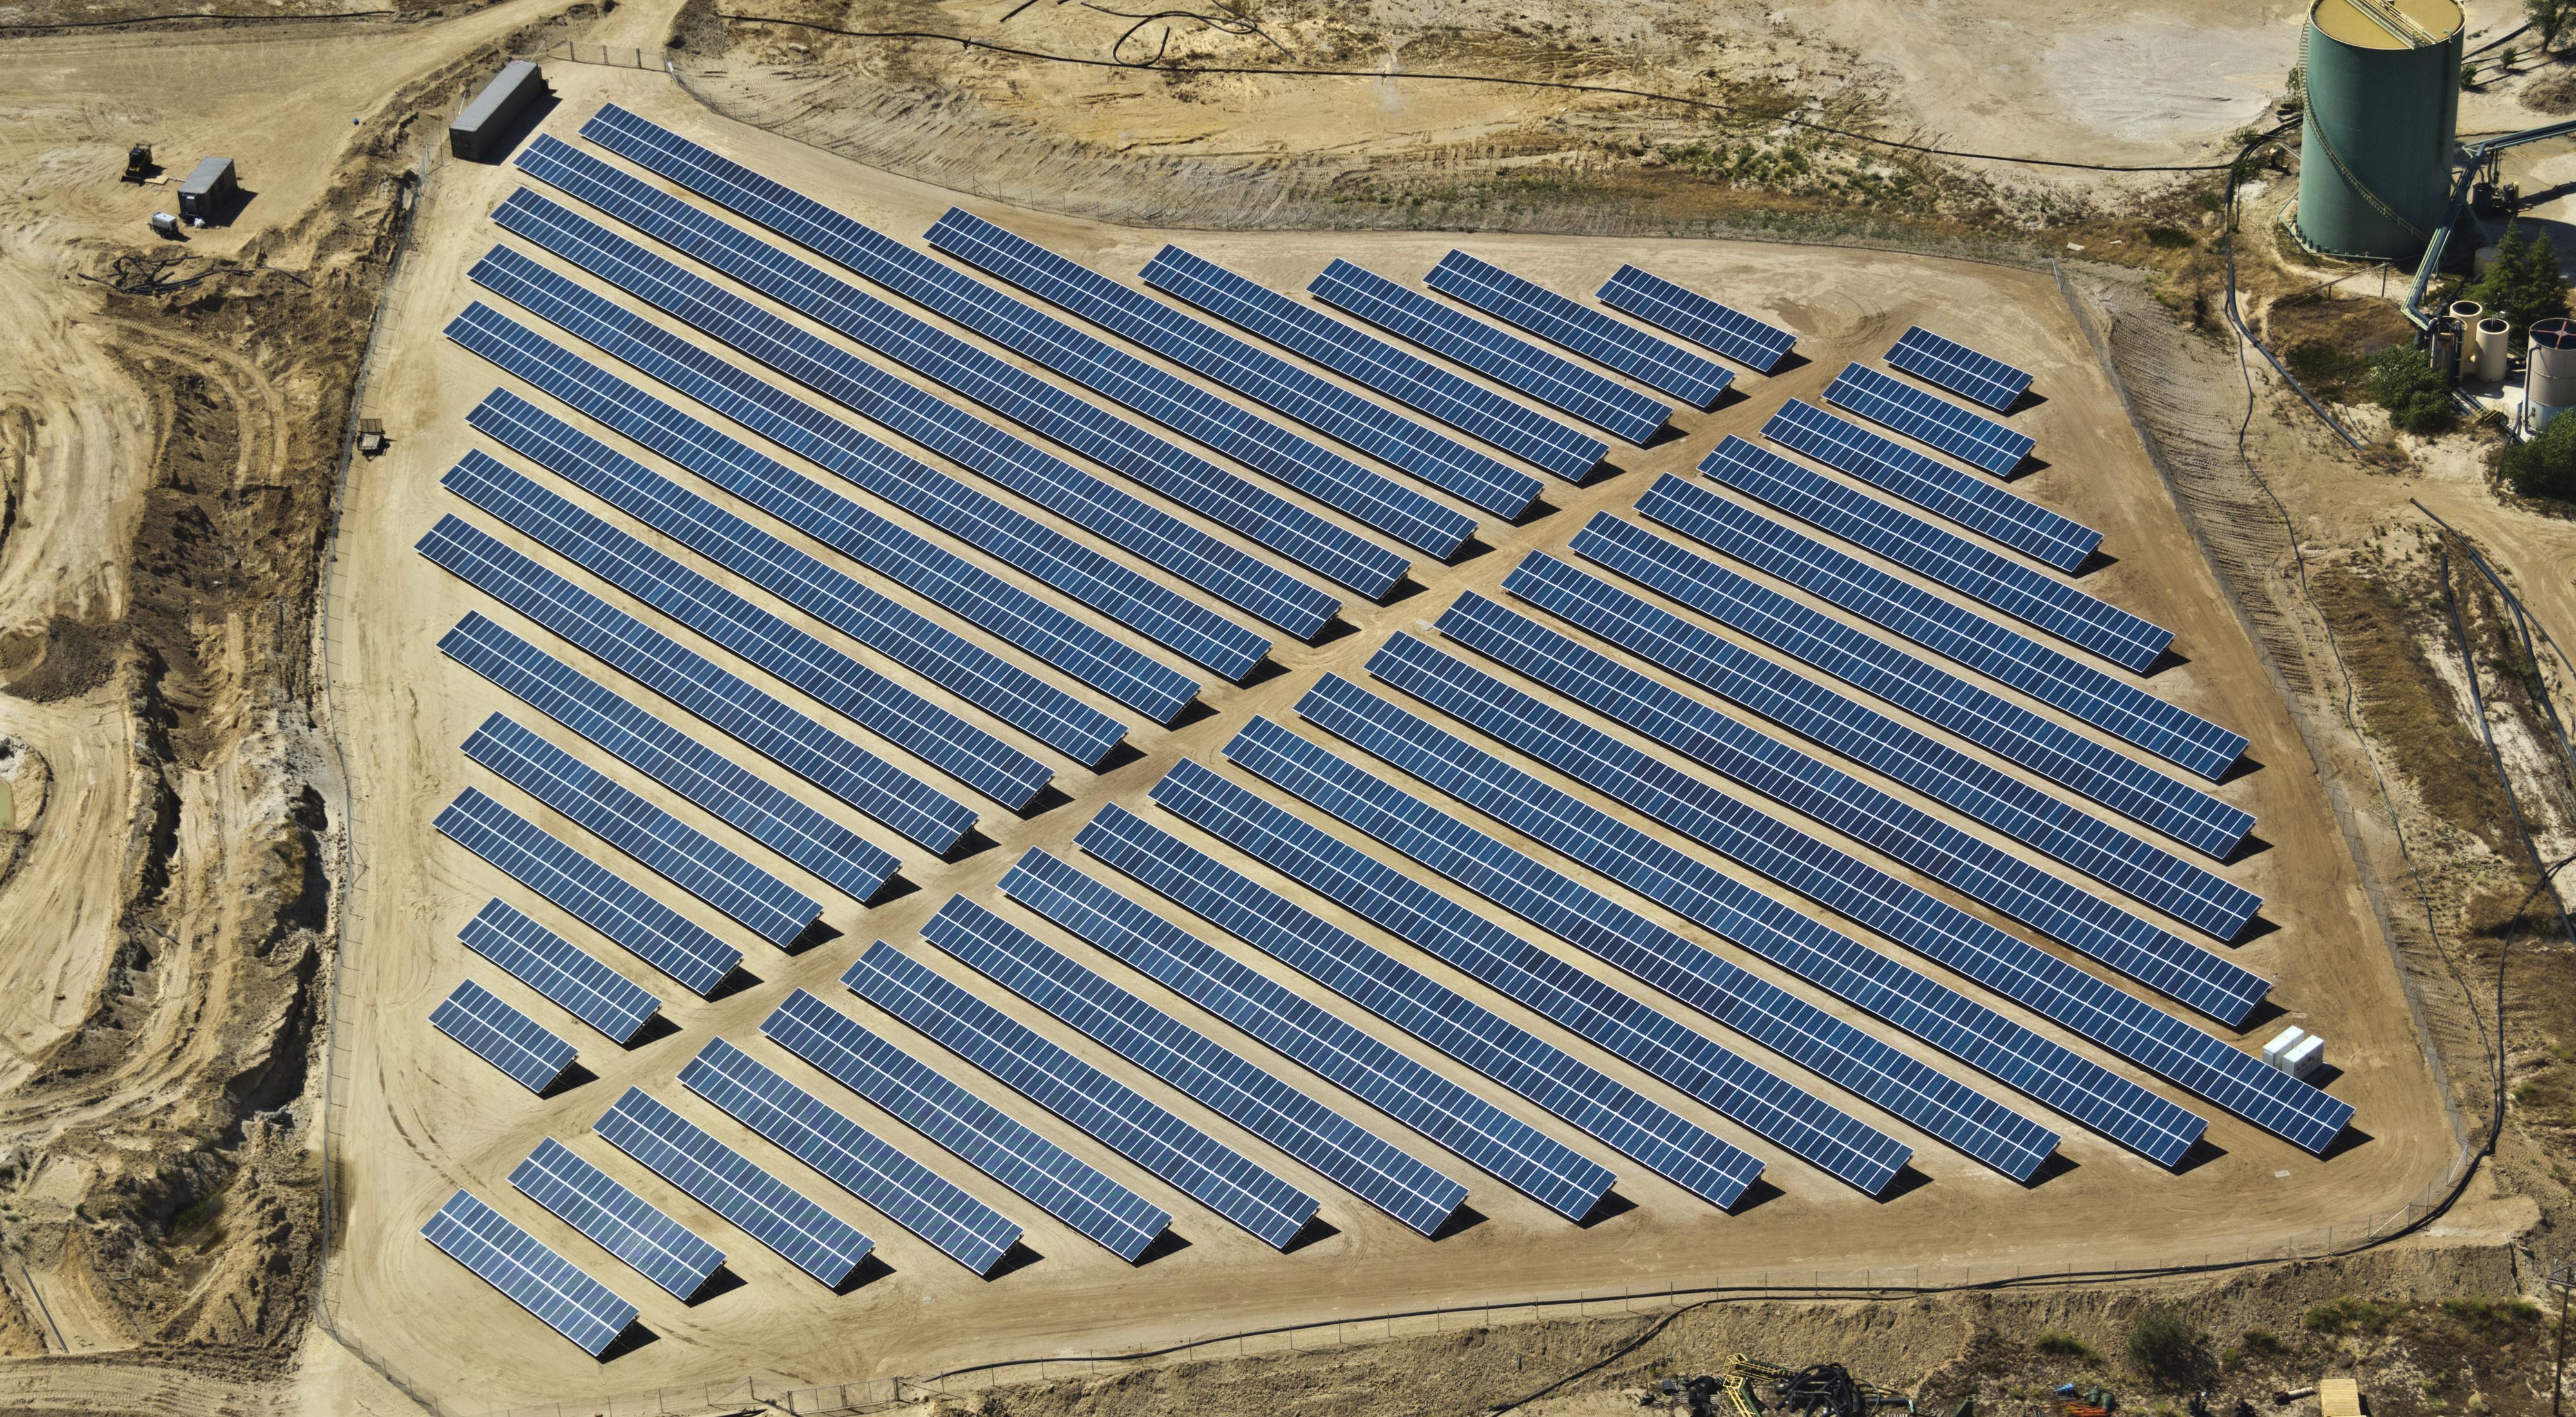 Aerial image of solar array in the desert. 